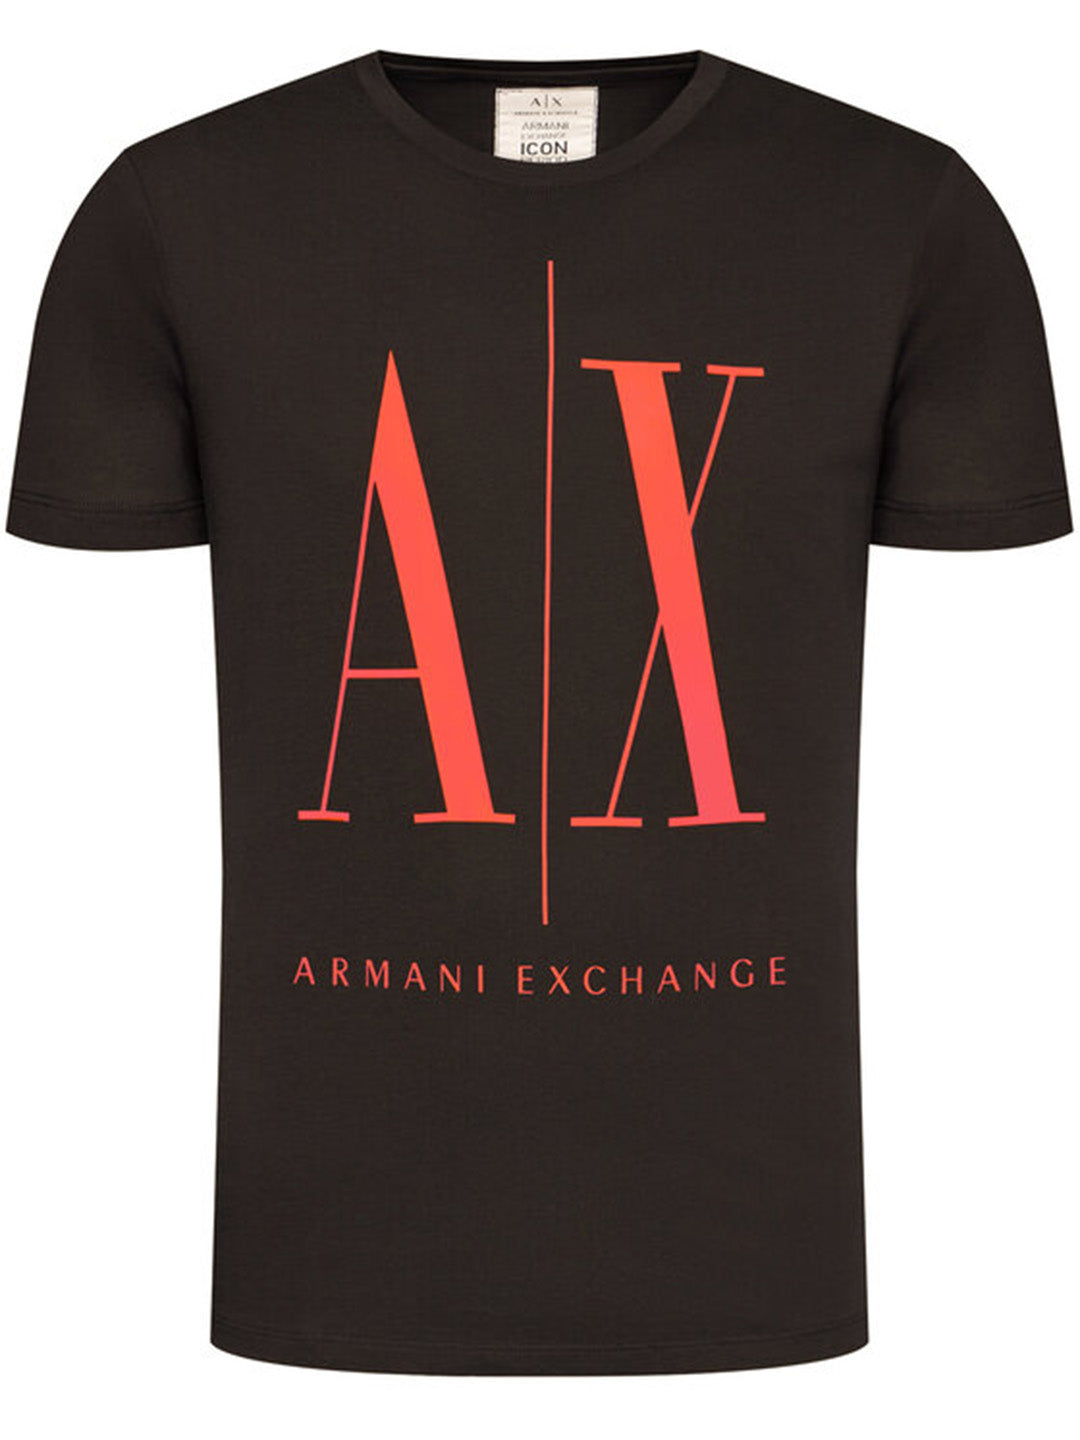 ARMANI EXCHANGE black/red cotton T-shirt